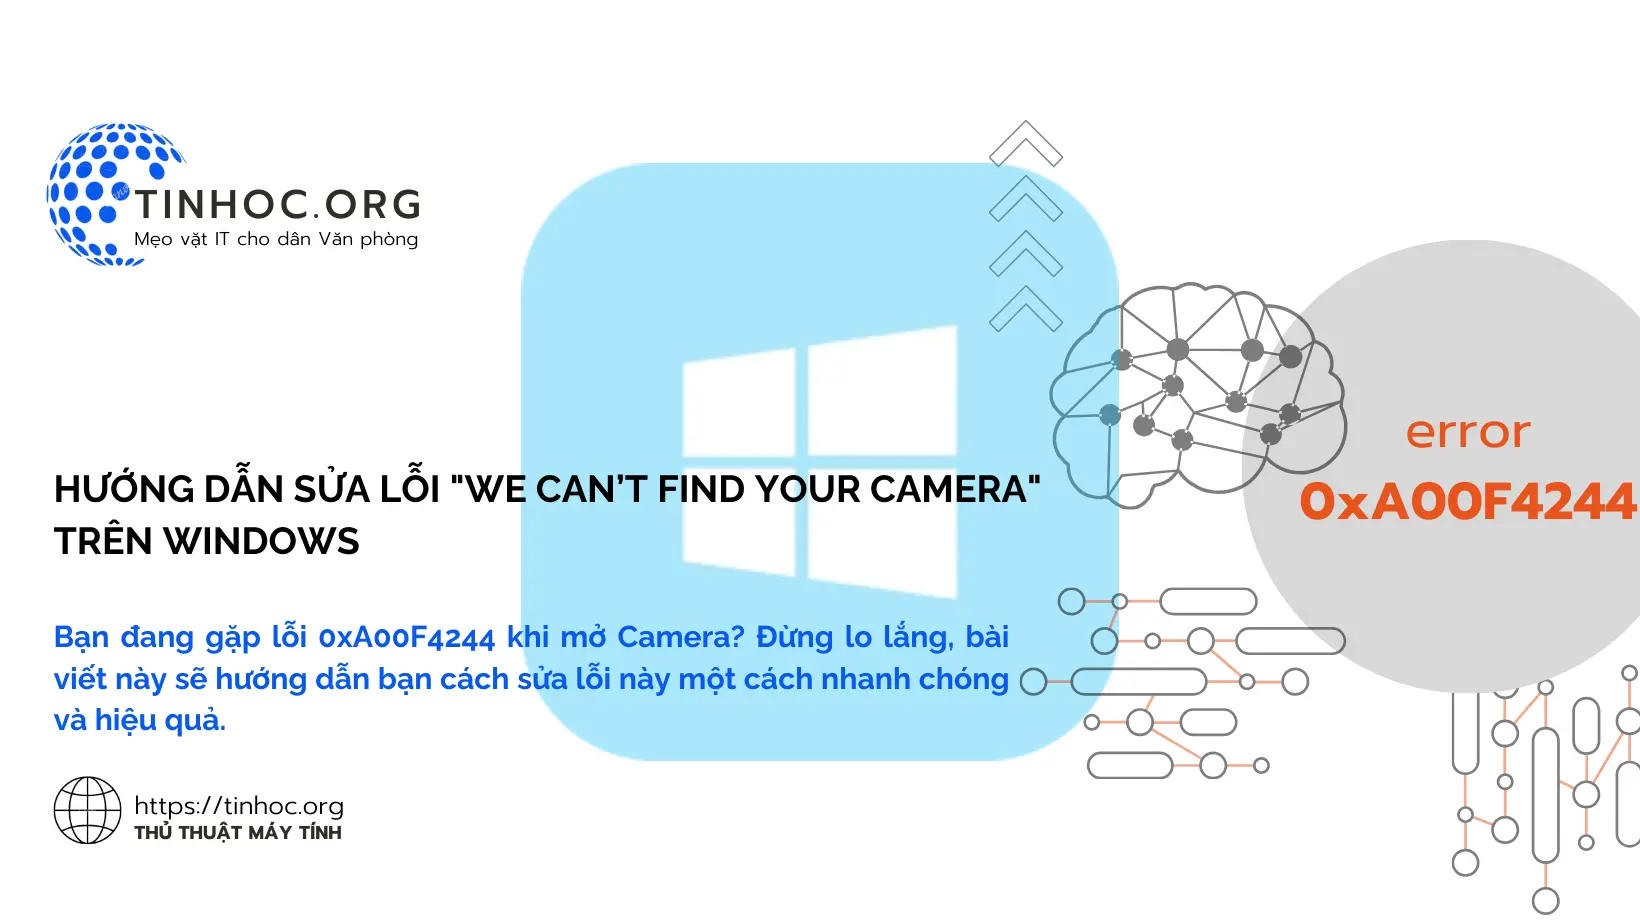 Hướng dẫn sửa lỗi "We Can’t Find Your Camera" trên Windows